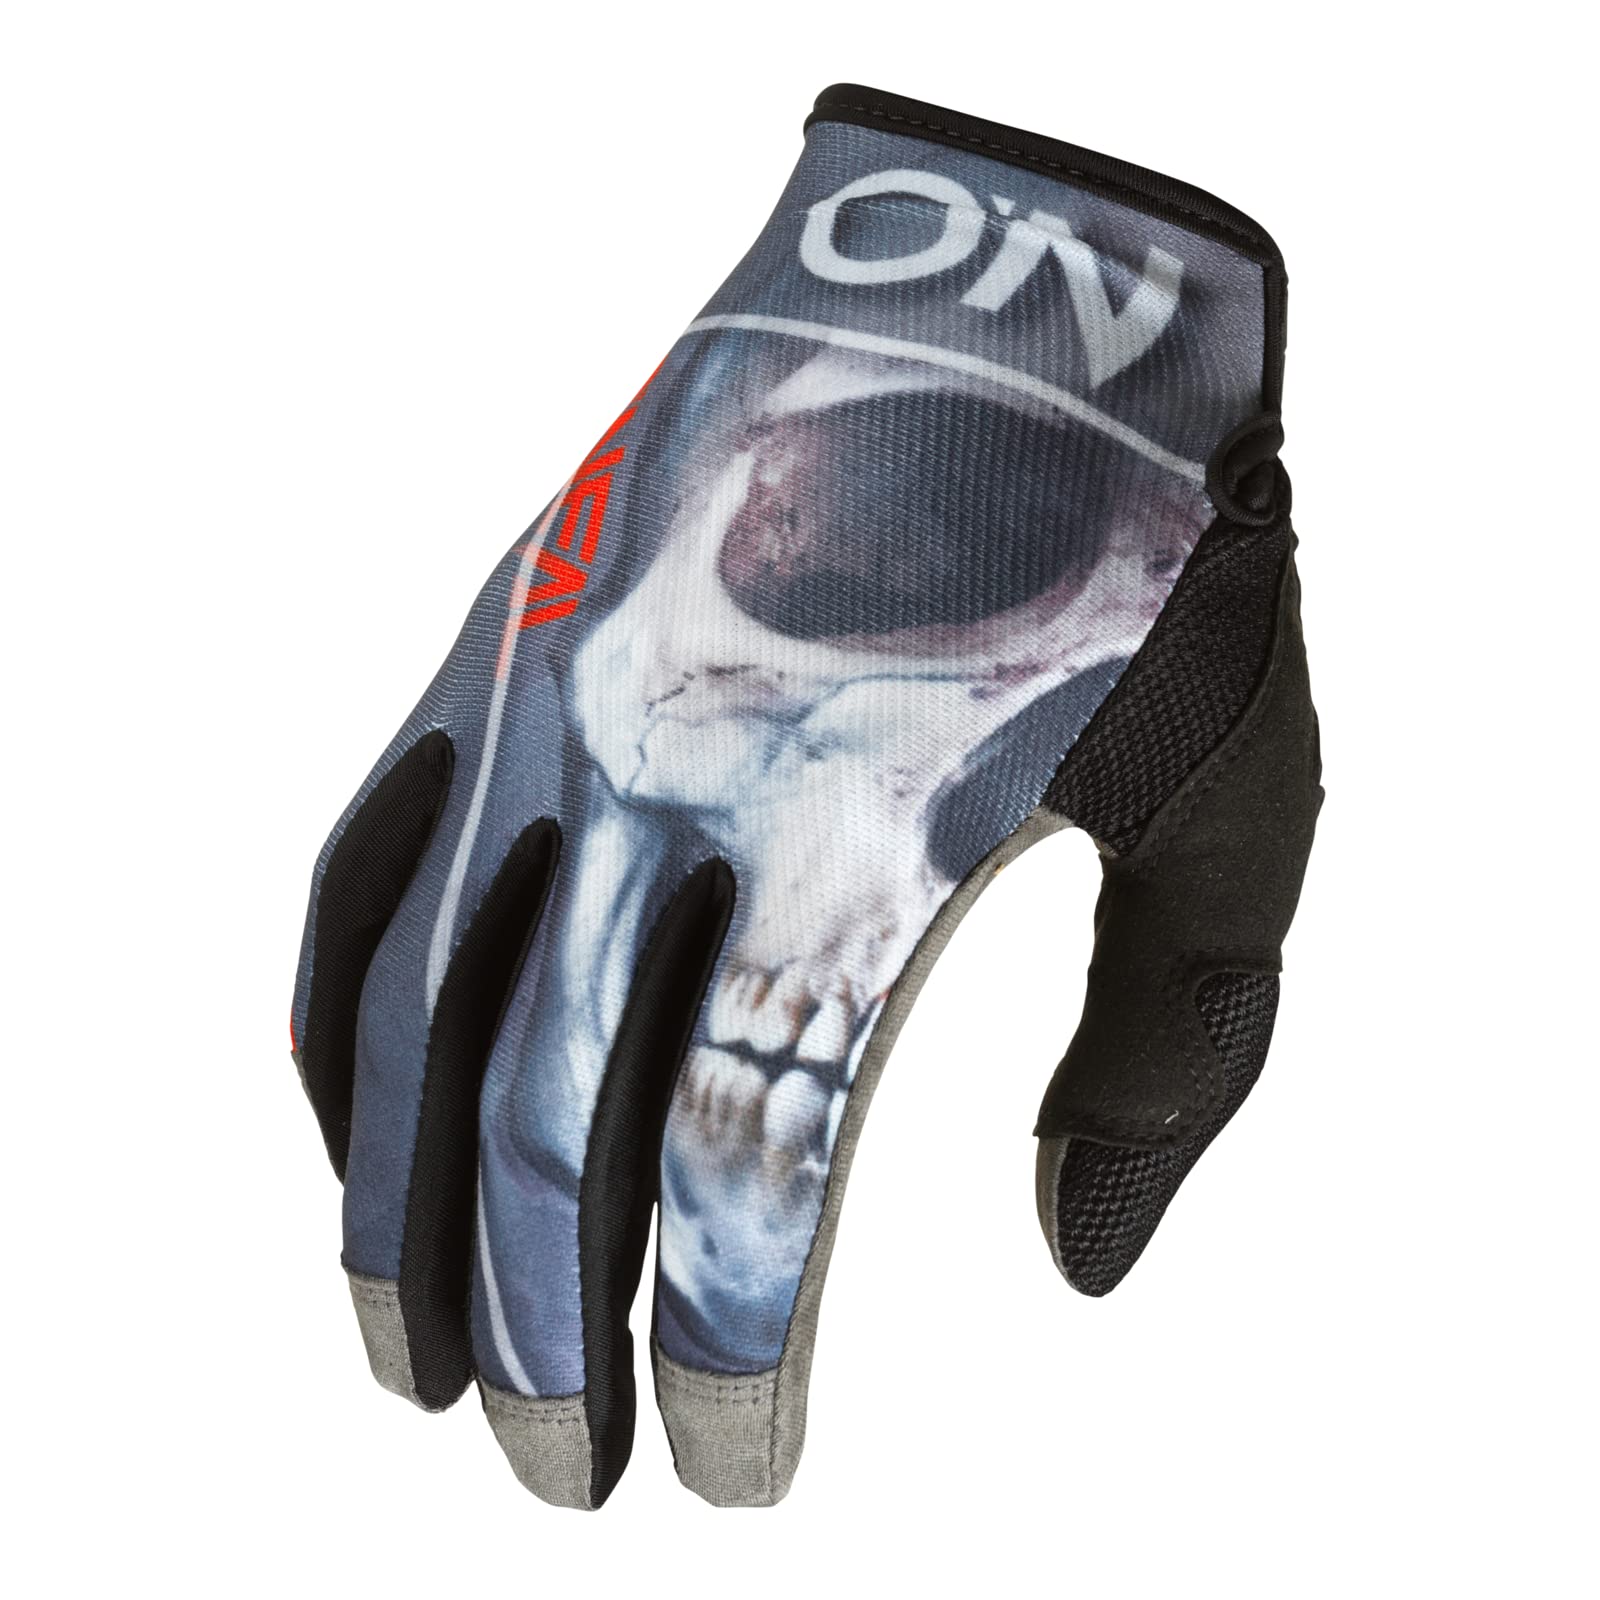 O'NEAL | Fahrrad- & Motocross-Handschuhe | MX MTB DH FR Downhill Freeride | Langlebige, Flexible Materialien, belüftete Nanofront-Handpartie | Mayhem Glove V.22 | Erwachsen | Schwarz Rot | XXL von O'NEAL